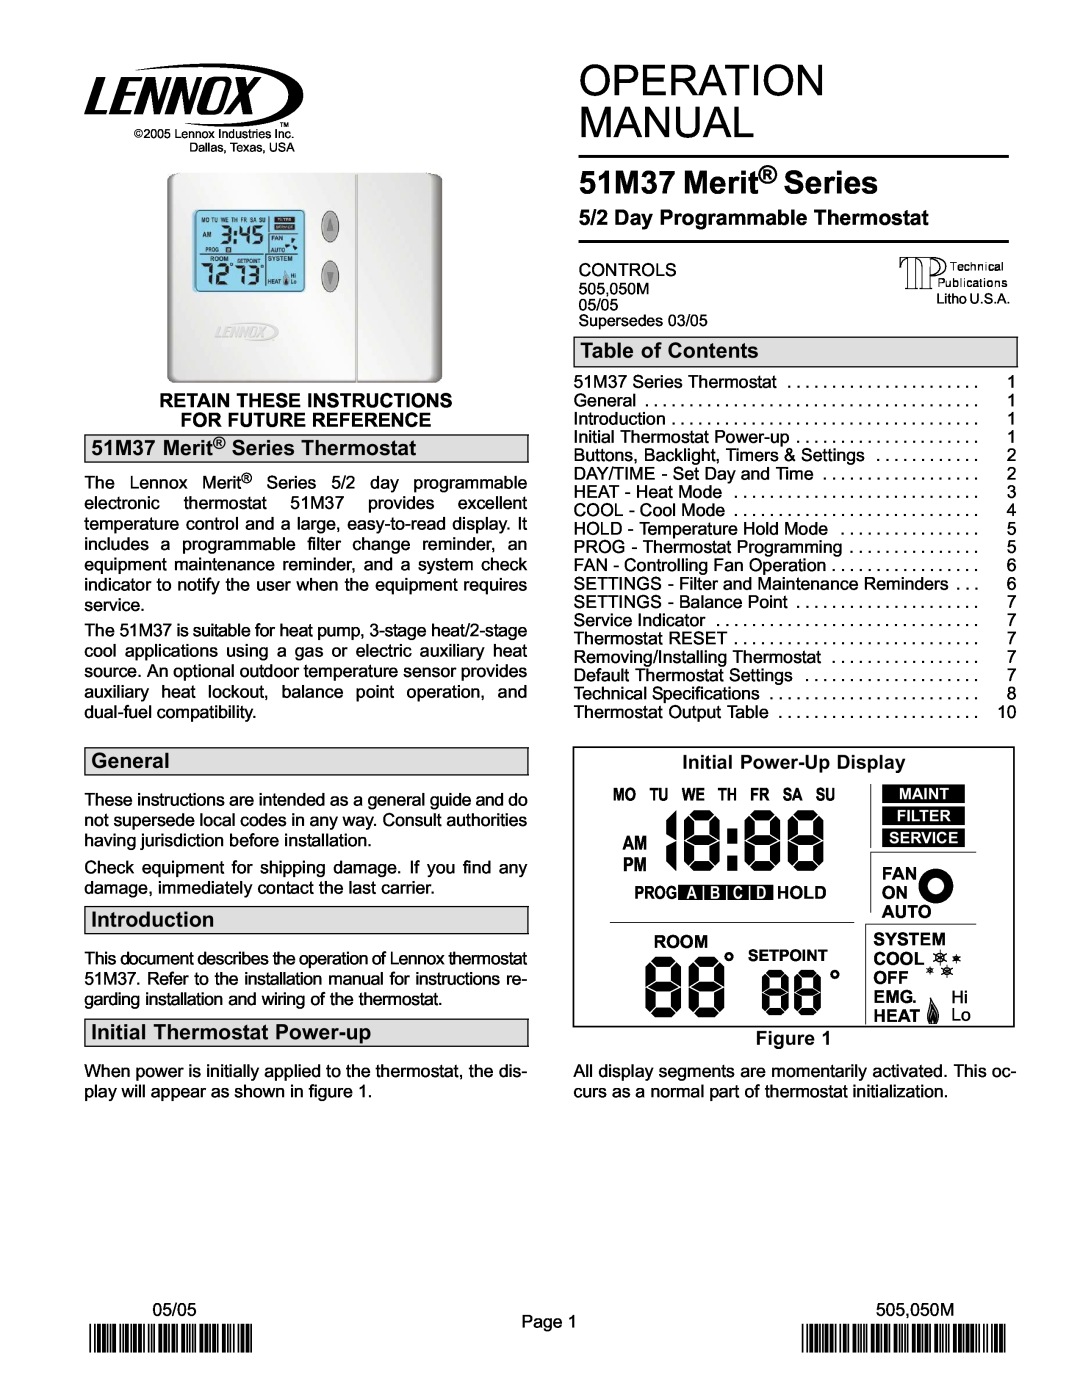 Lennox International Inc operation manual I8, 2P0505, P505050M, 51M37 Merit Series Thermostat, General 